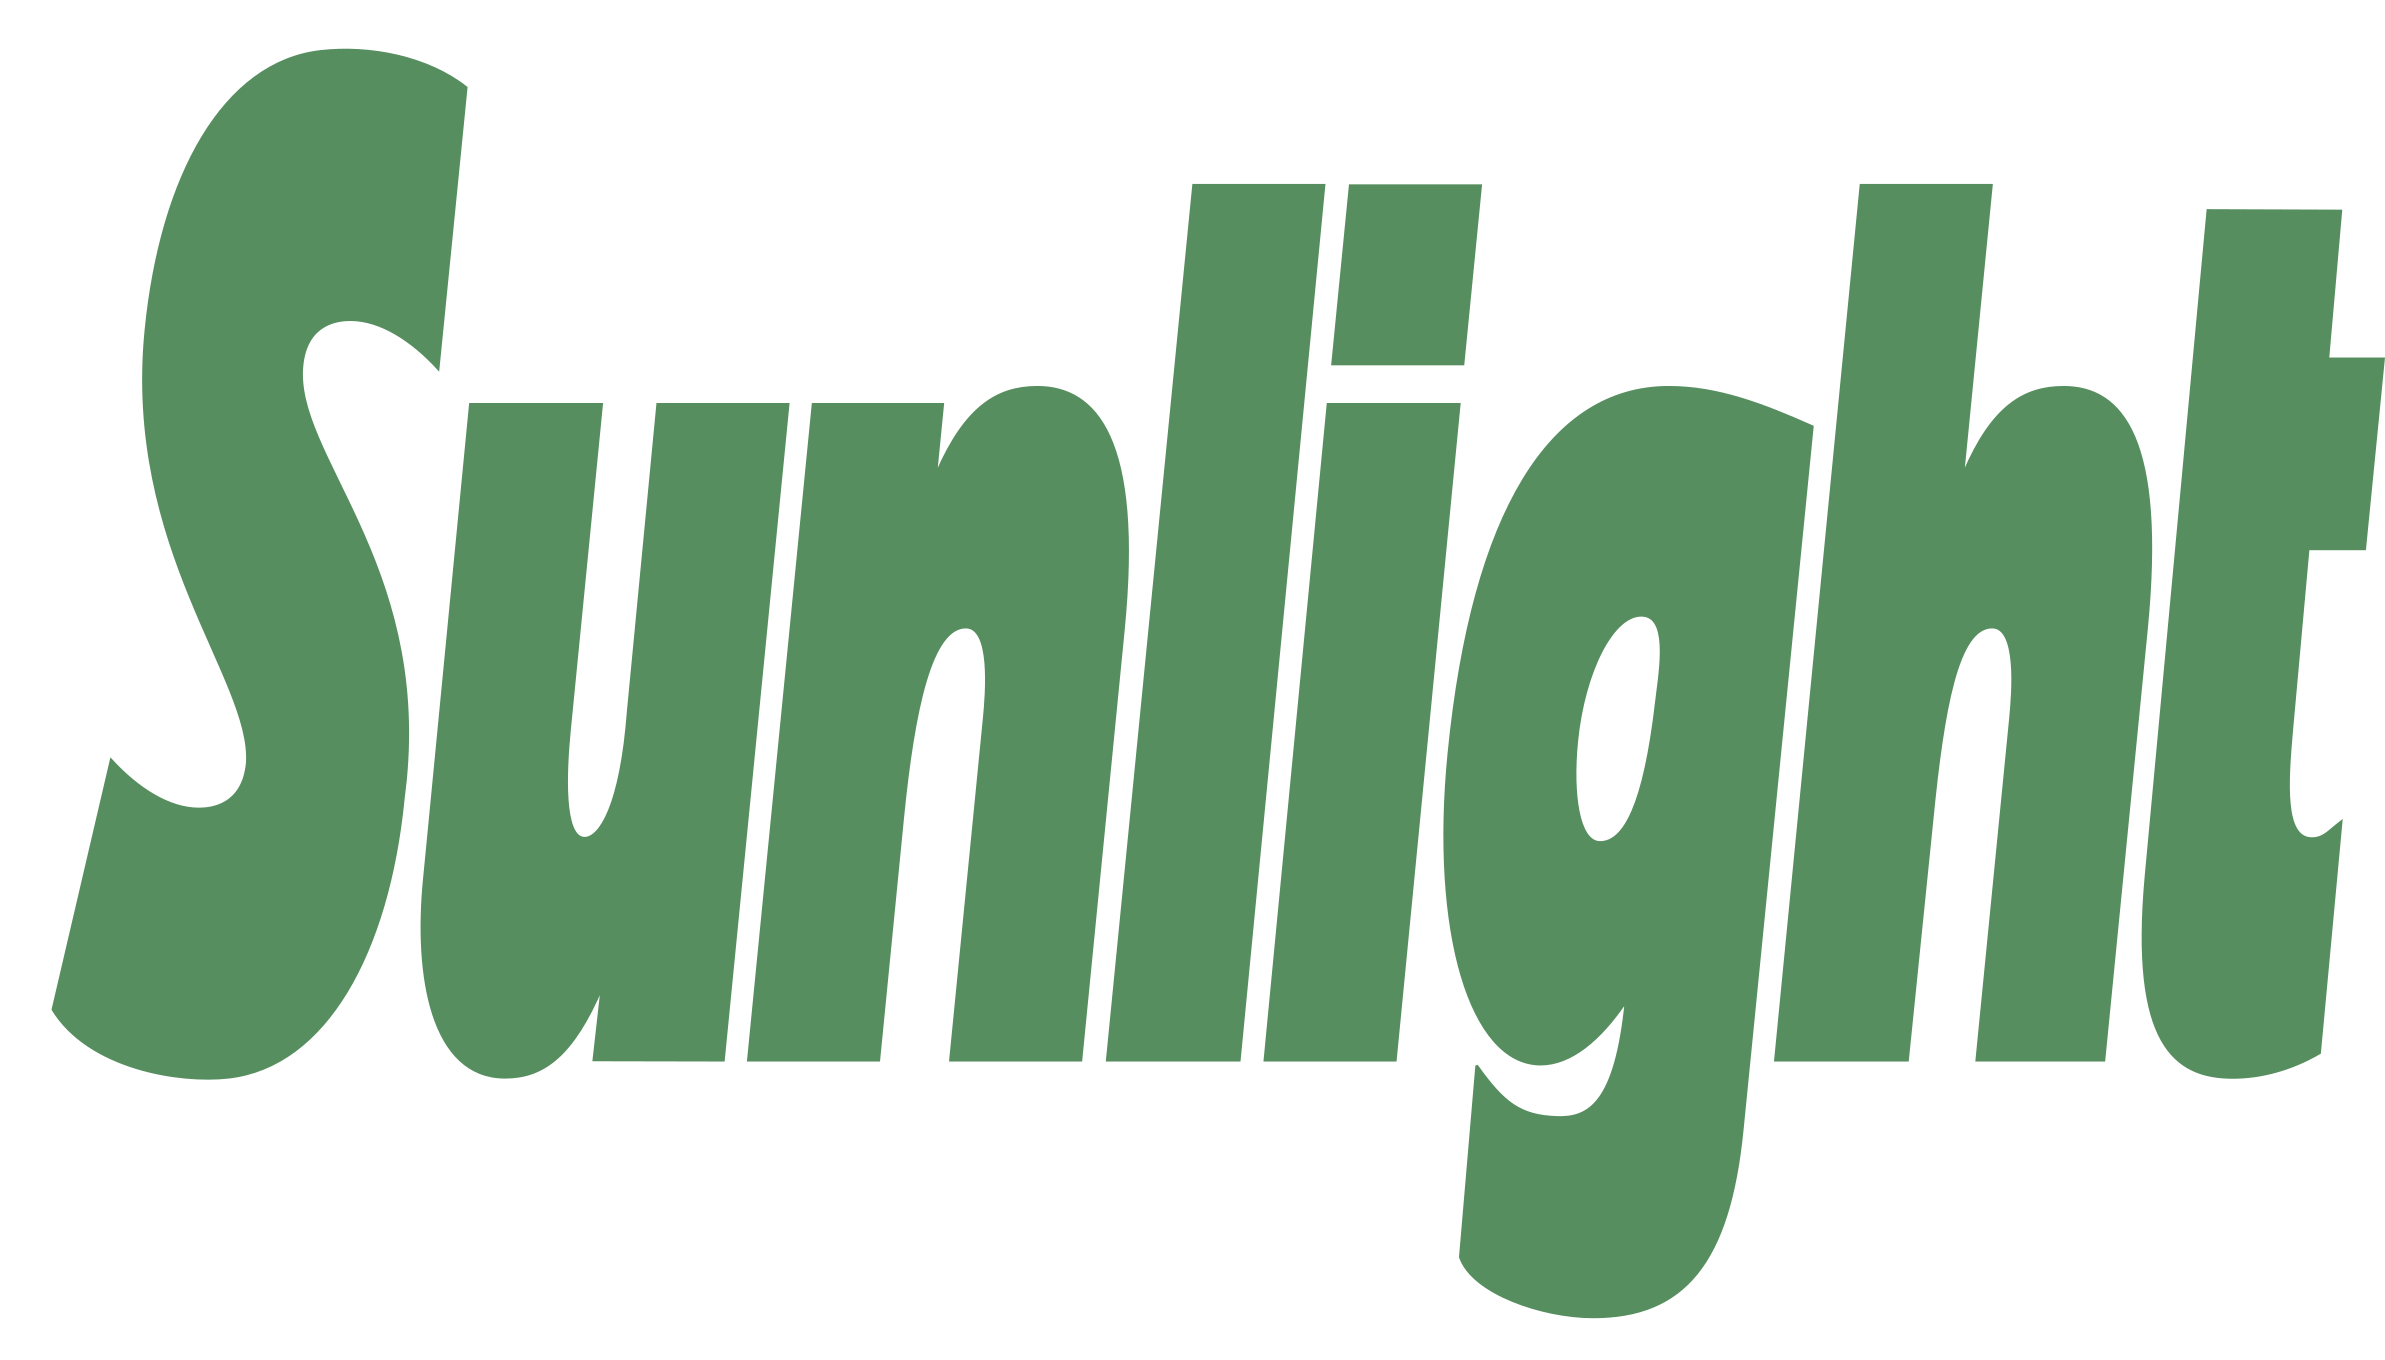 Sunlight Logo Green Text PNG image